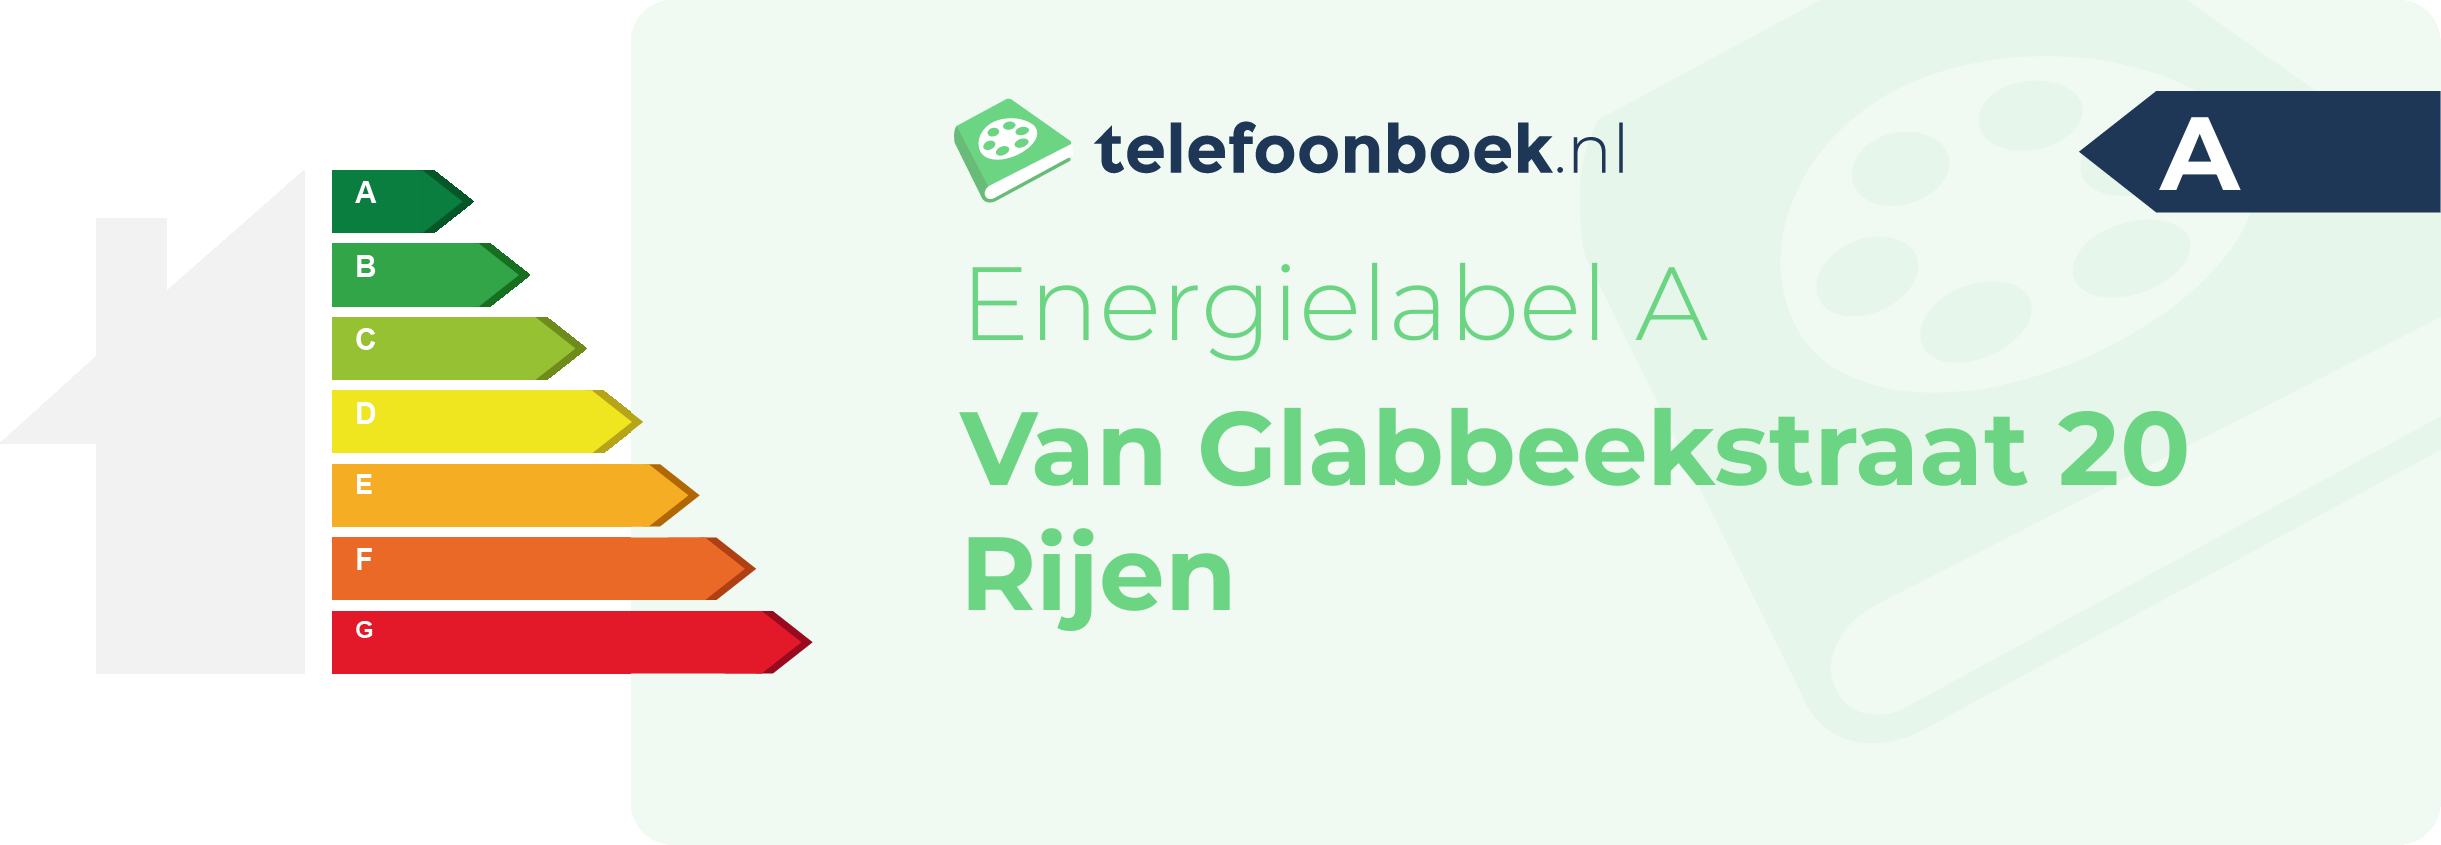 Energielabel Van Glabbeekstraat 20 Rijen